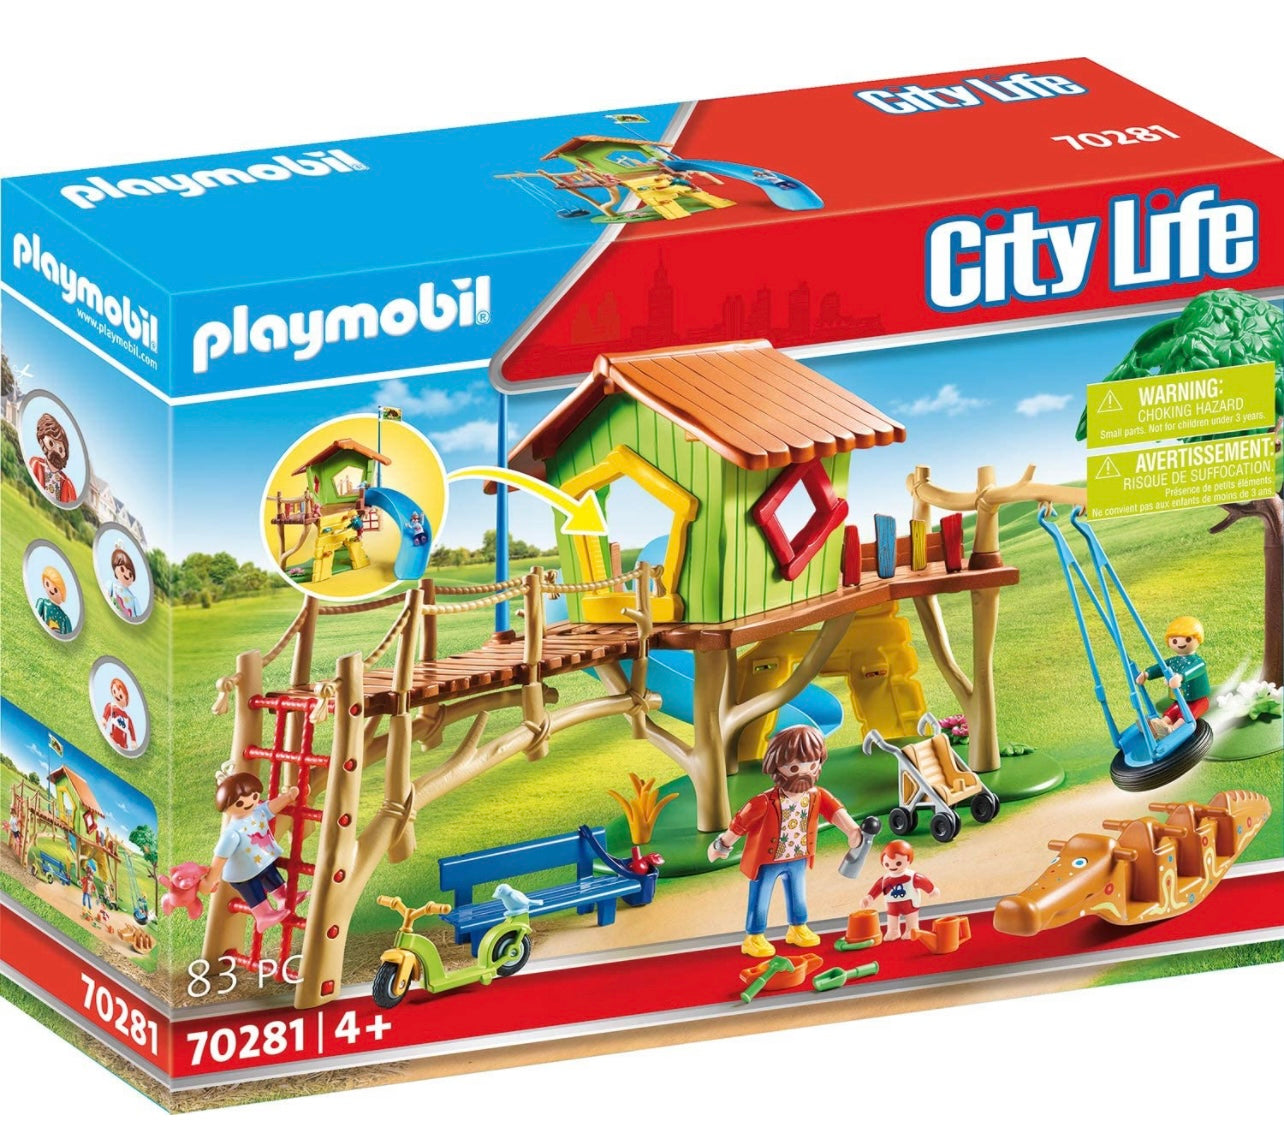 PlayMobil City Life